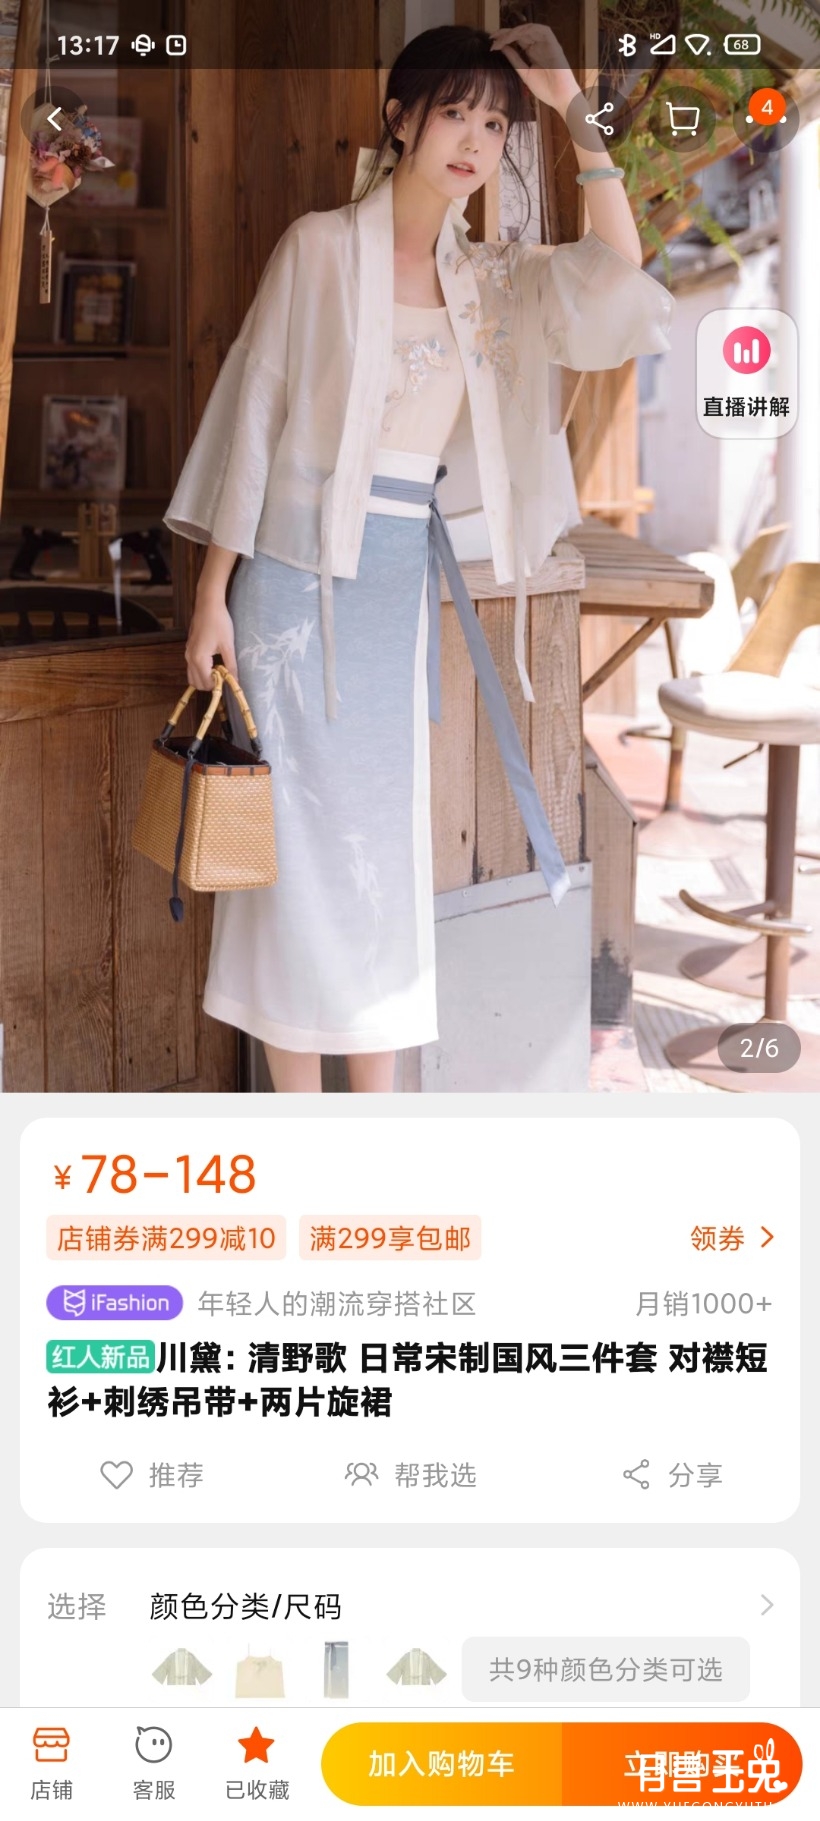 Screenshot_2021-03-31-13-17-40-098_com.taobao.taobao.jpg